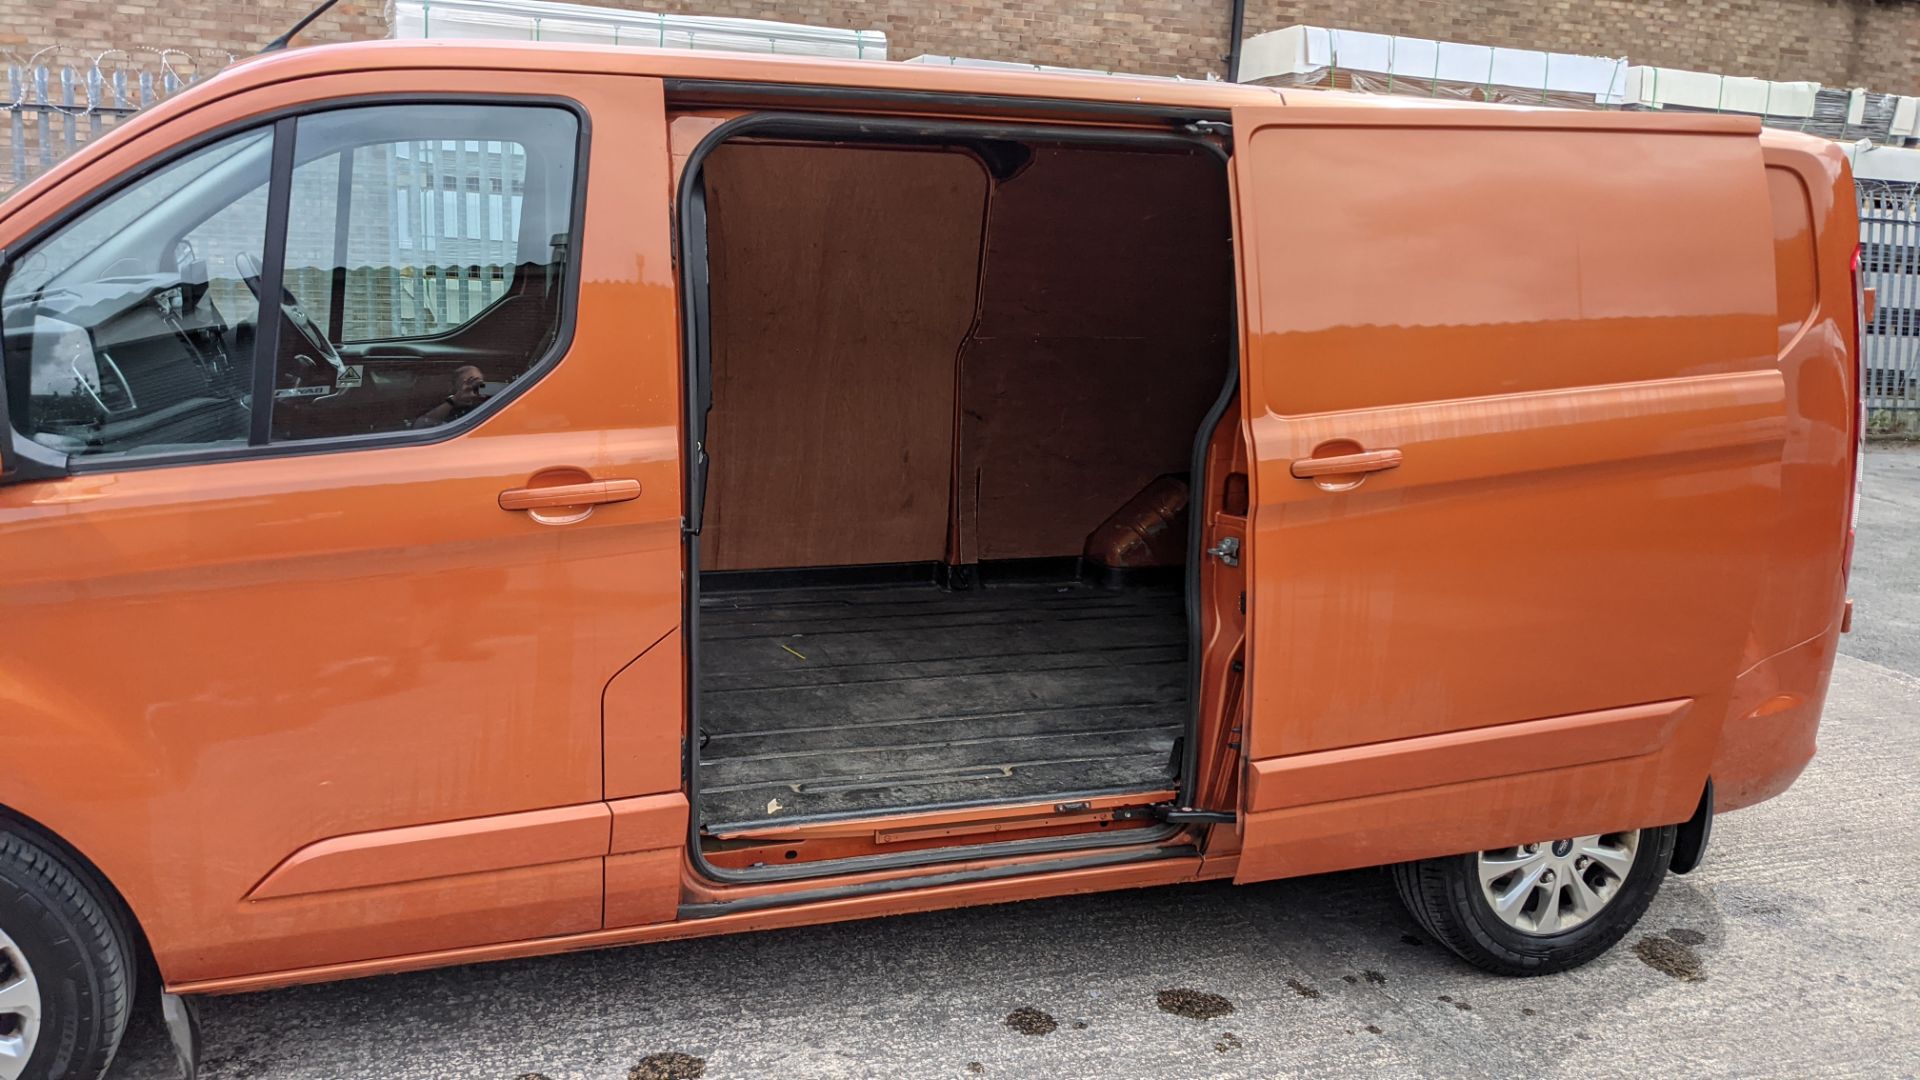 2019 Ford Transit Custom 300 L2 van, Orange Glow. High spec: Heated seats, air con, parking sensors - Image 38 of 66